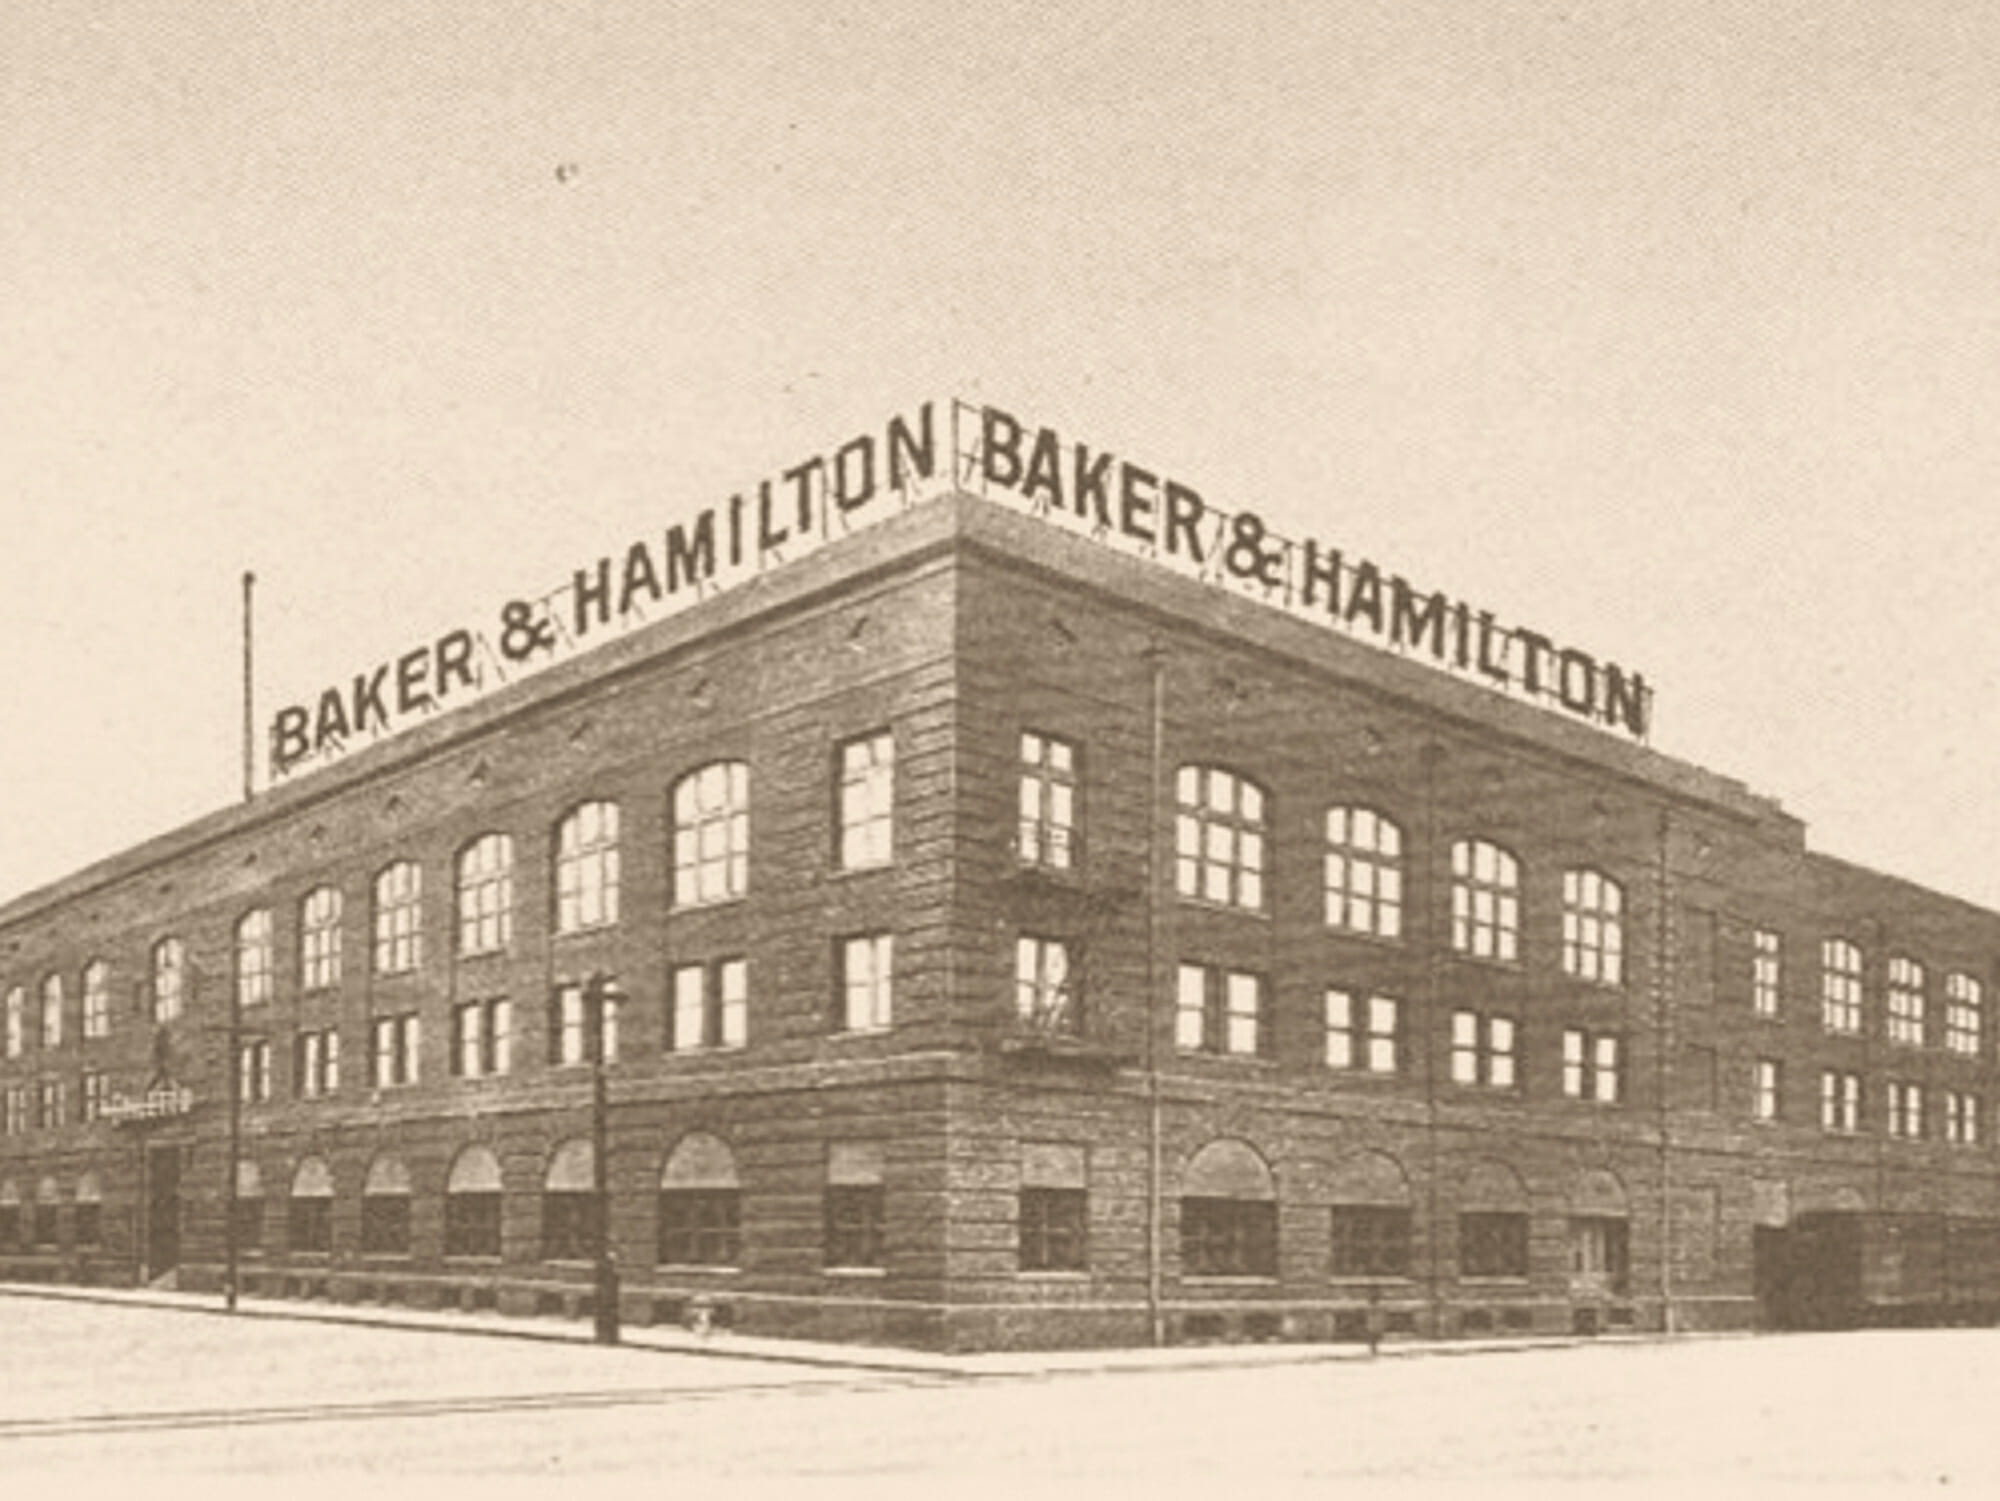 Baker & Hamilton Building